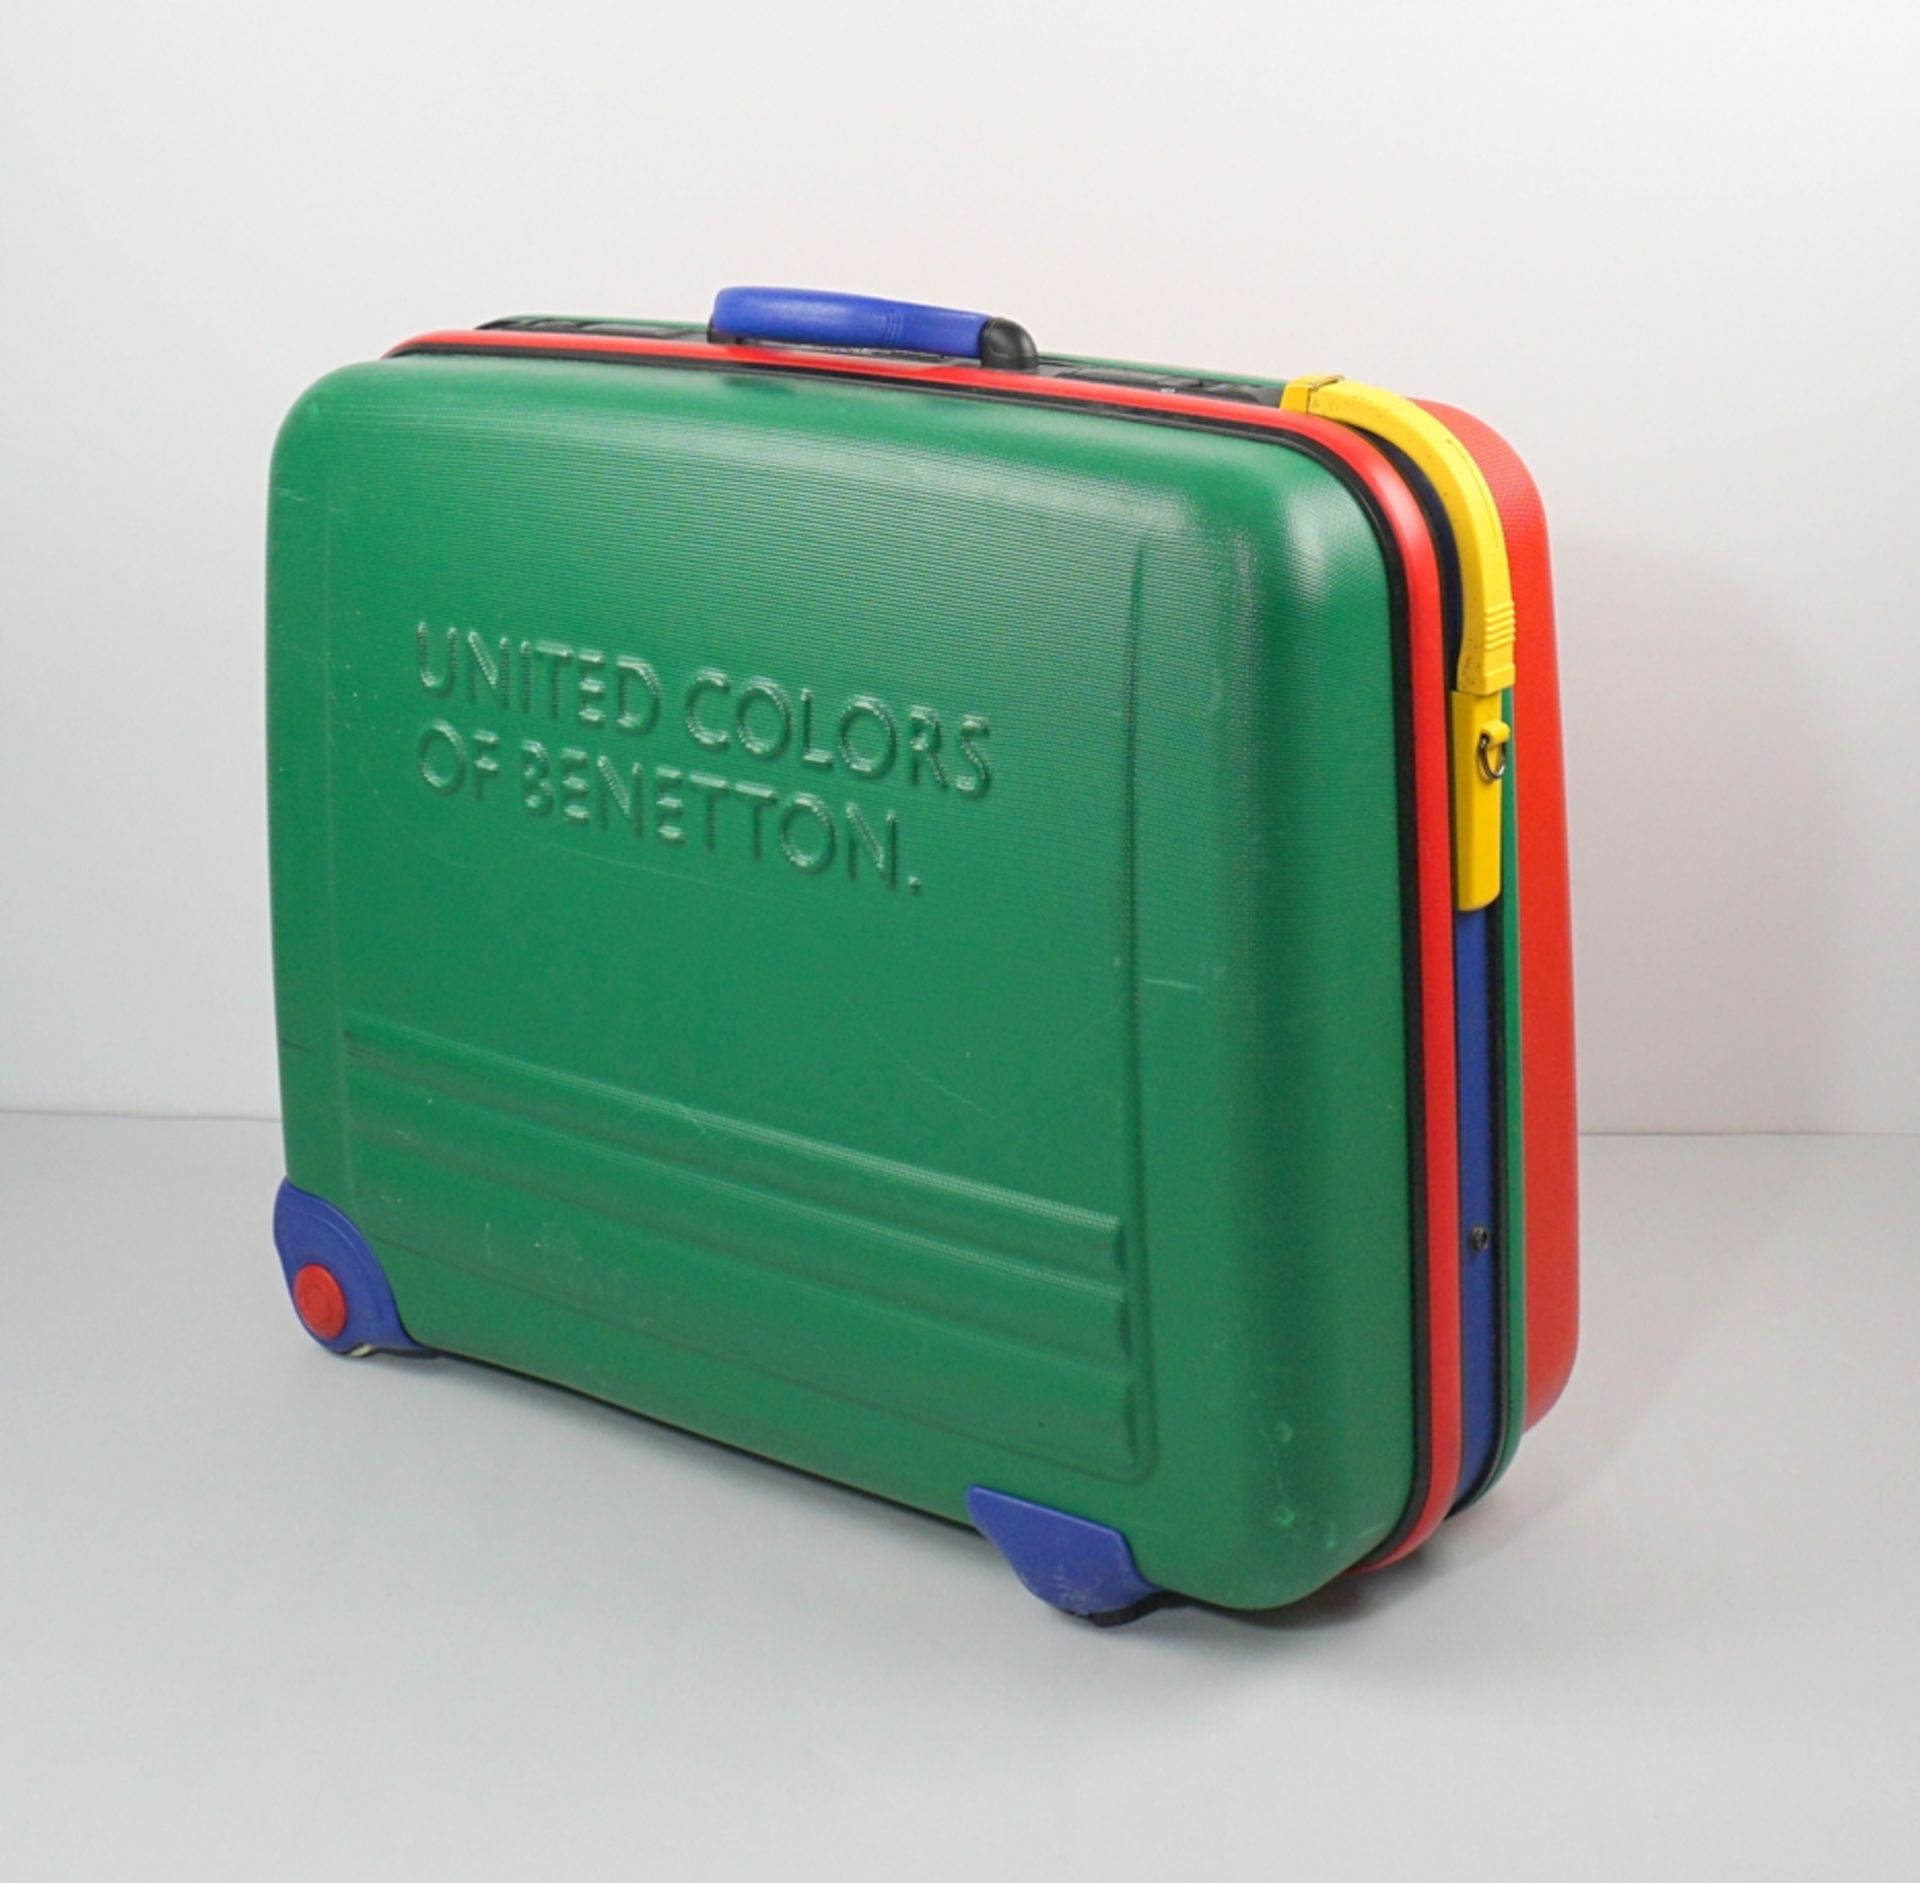 Reisekoffer United Colors of Benetton, 1990er Jahre